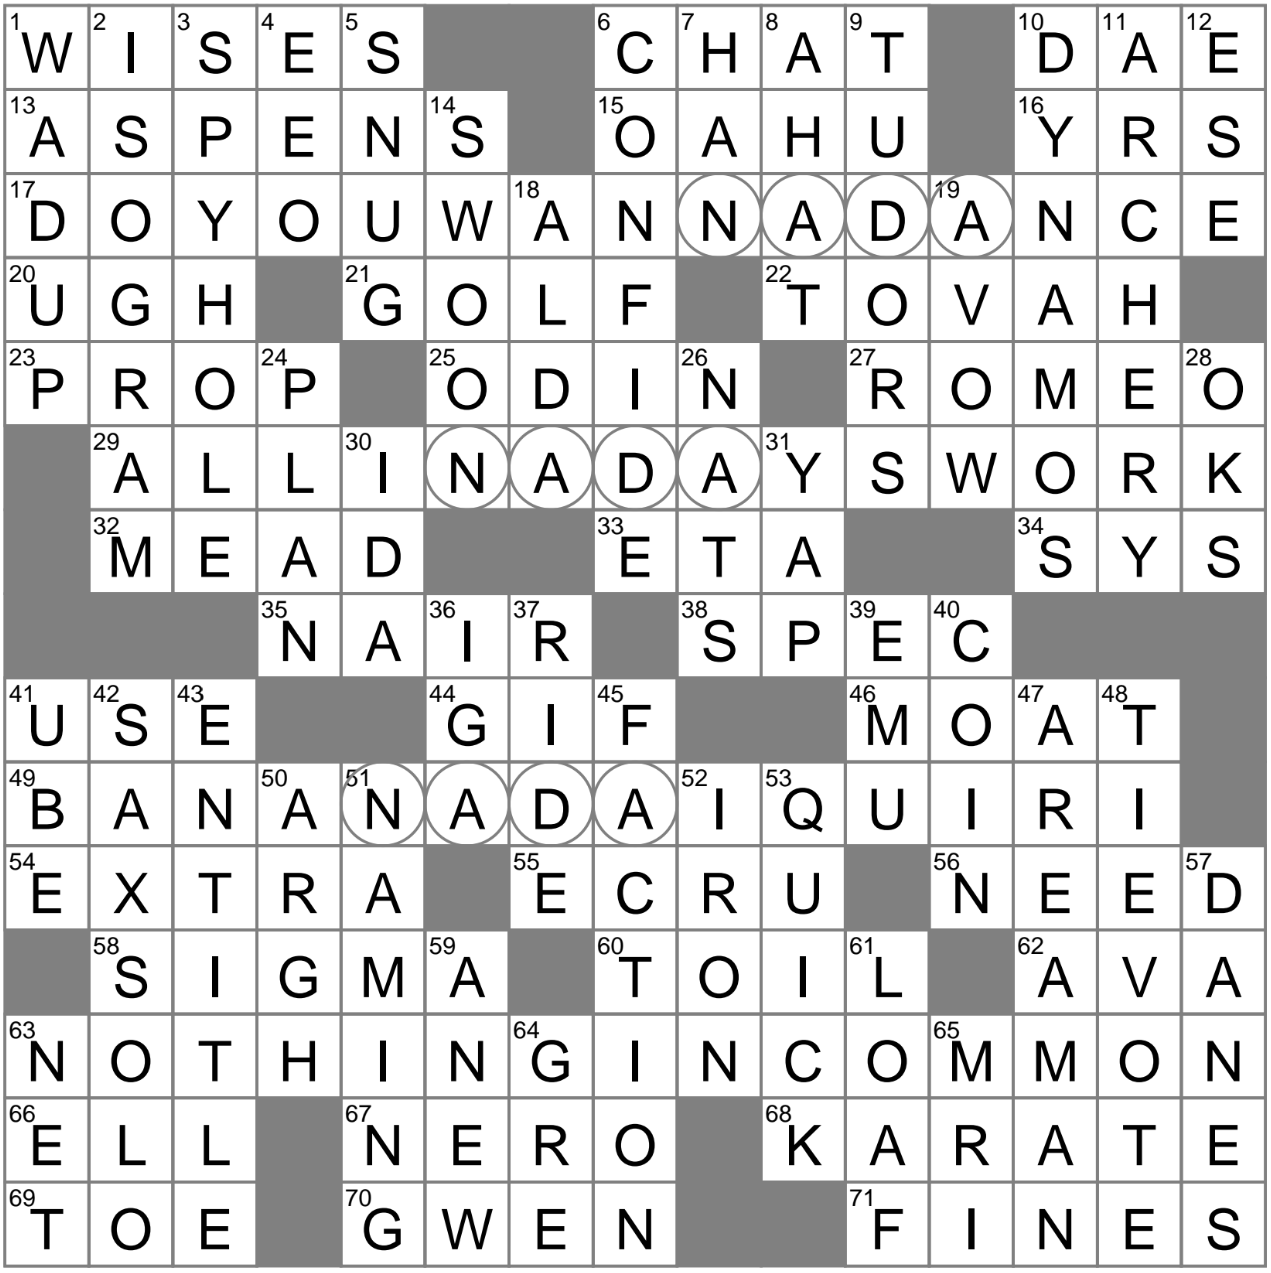 LA Times Crossword 10 Jan 23 Tuesday LAXCrossword com